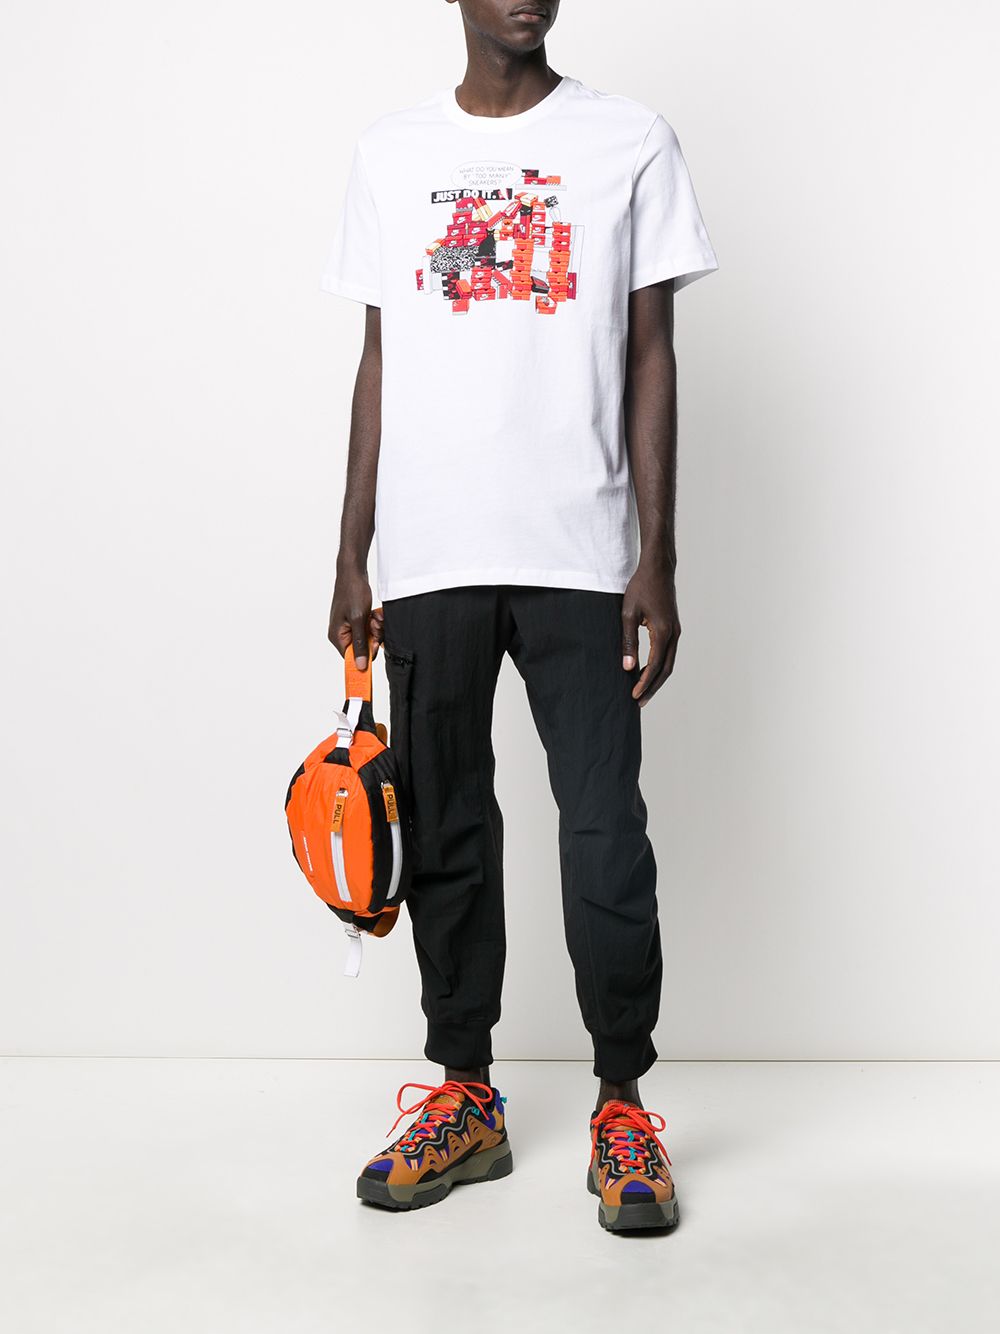 Nike Sneaker Culture T-shirt - Farfetch